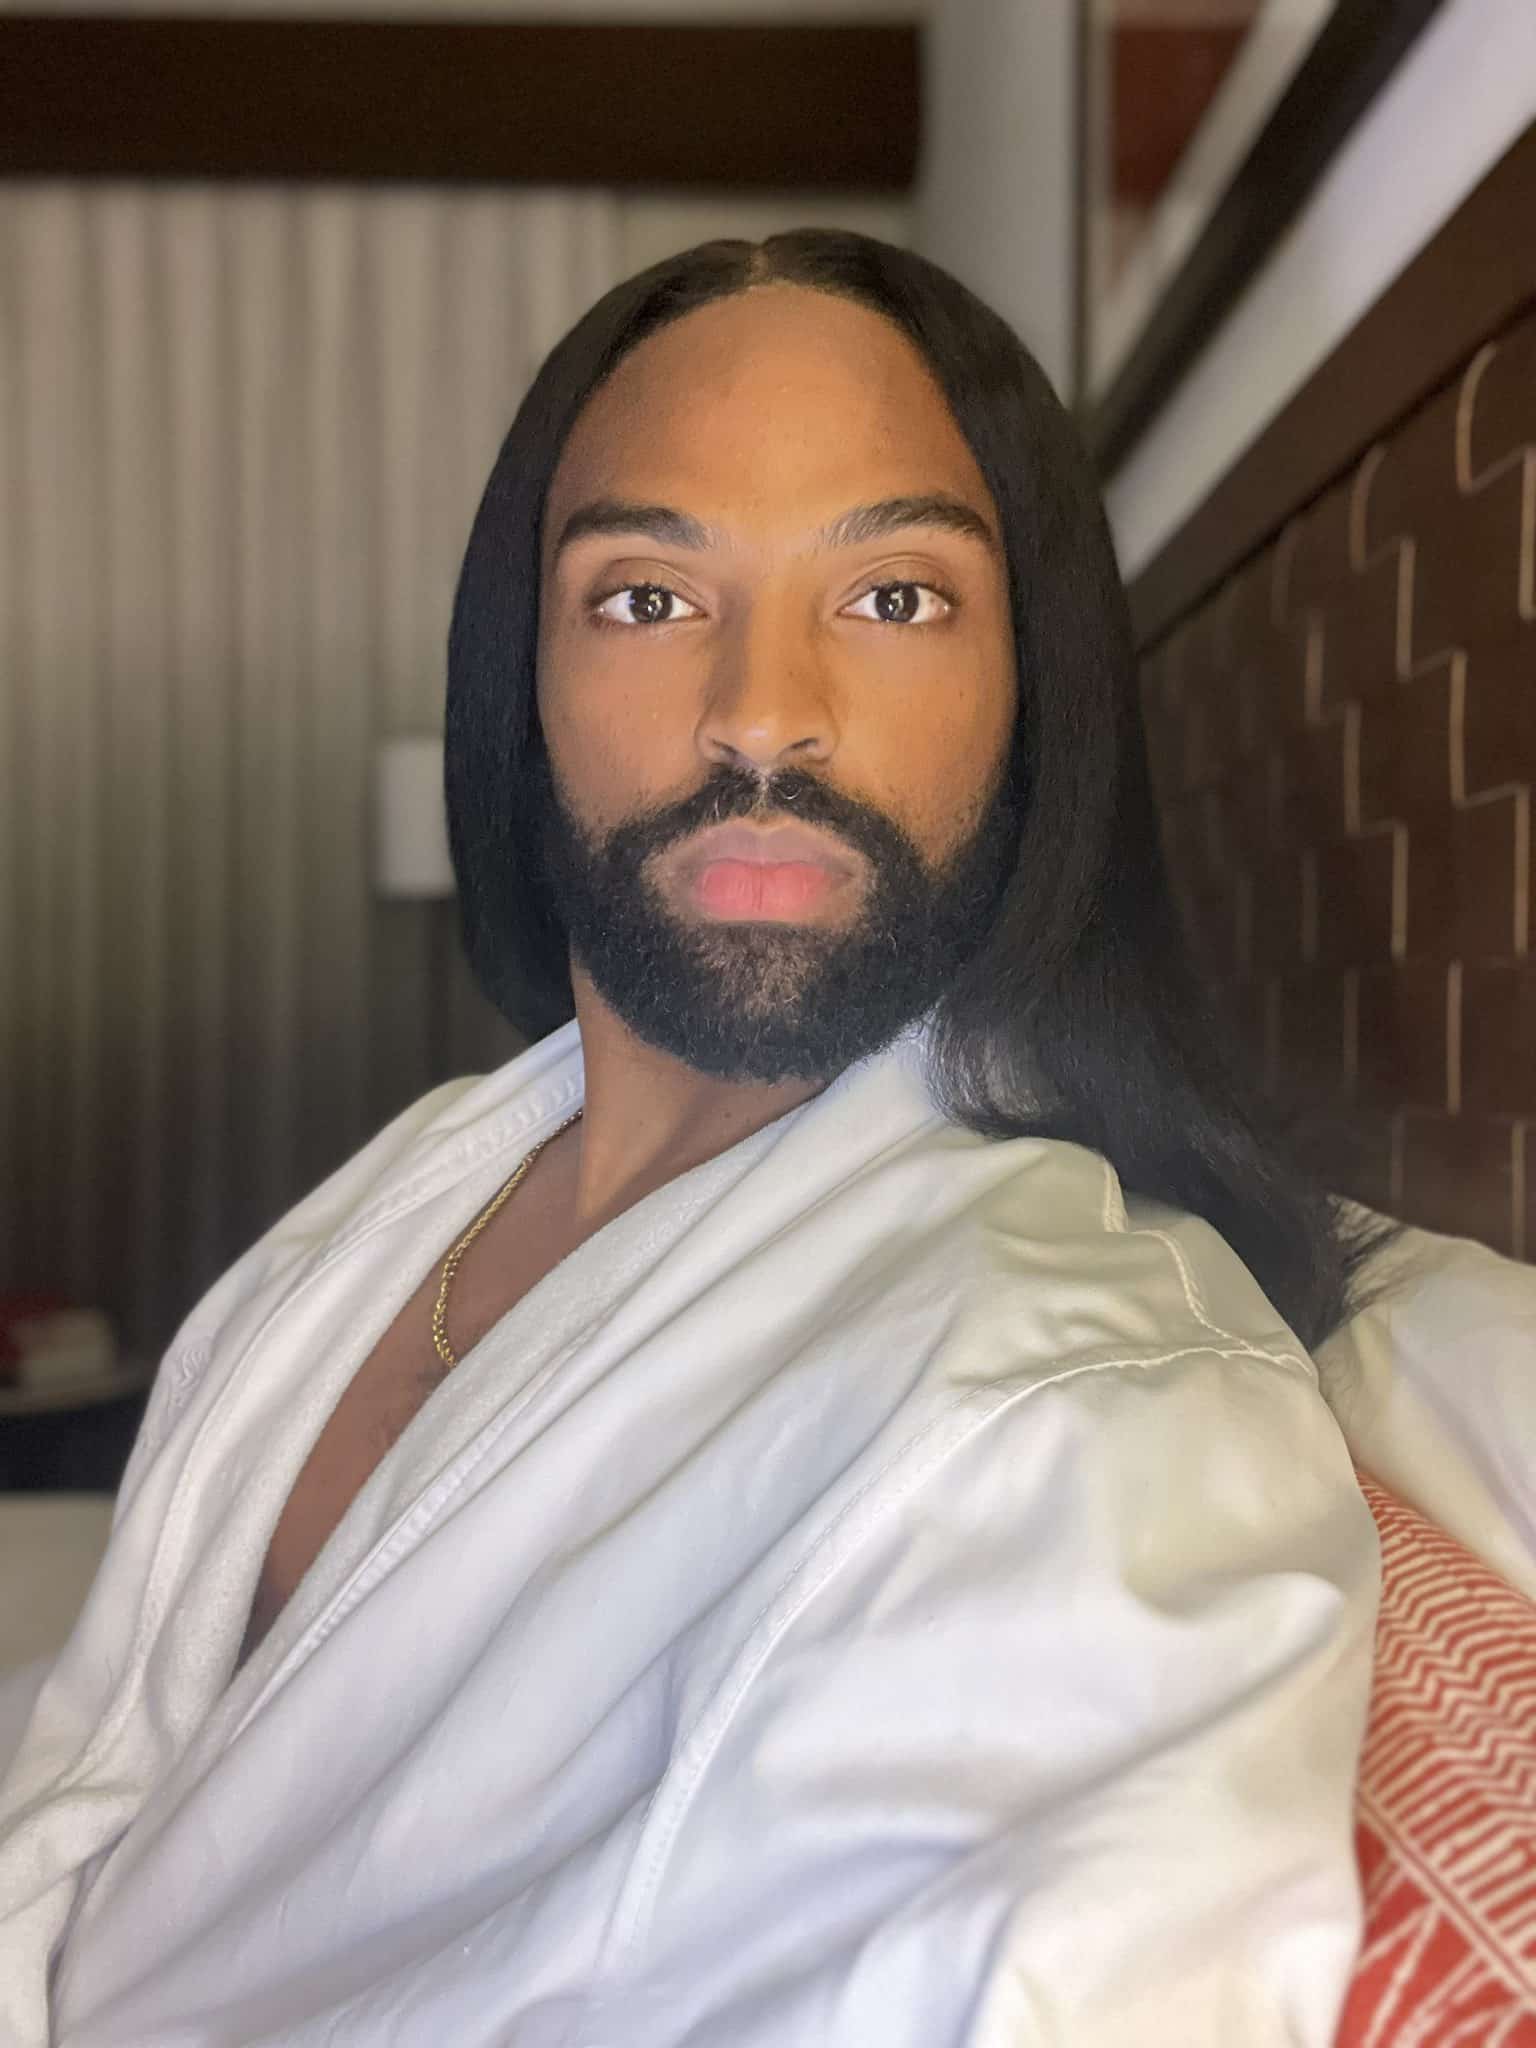 man resembles jesus